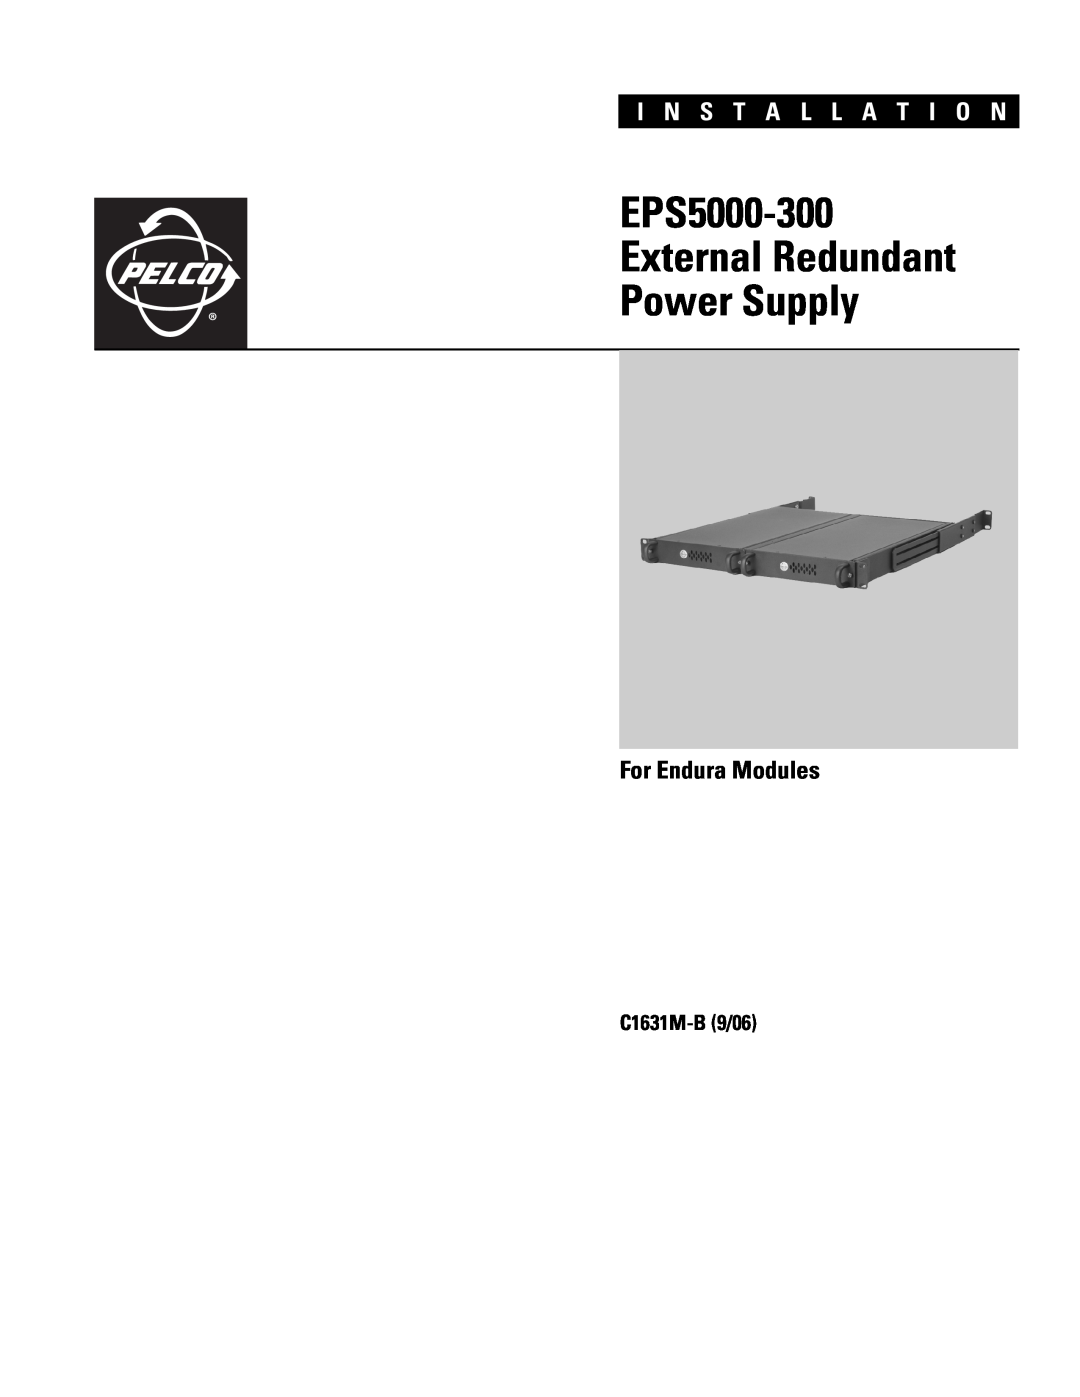 Pelco manual For Endura Modules, EPS5000-300 External Redundant Power Supply, I N S T A L L A T I O N, C1631M-B 9/06 